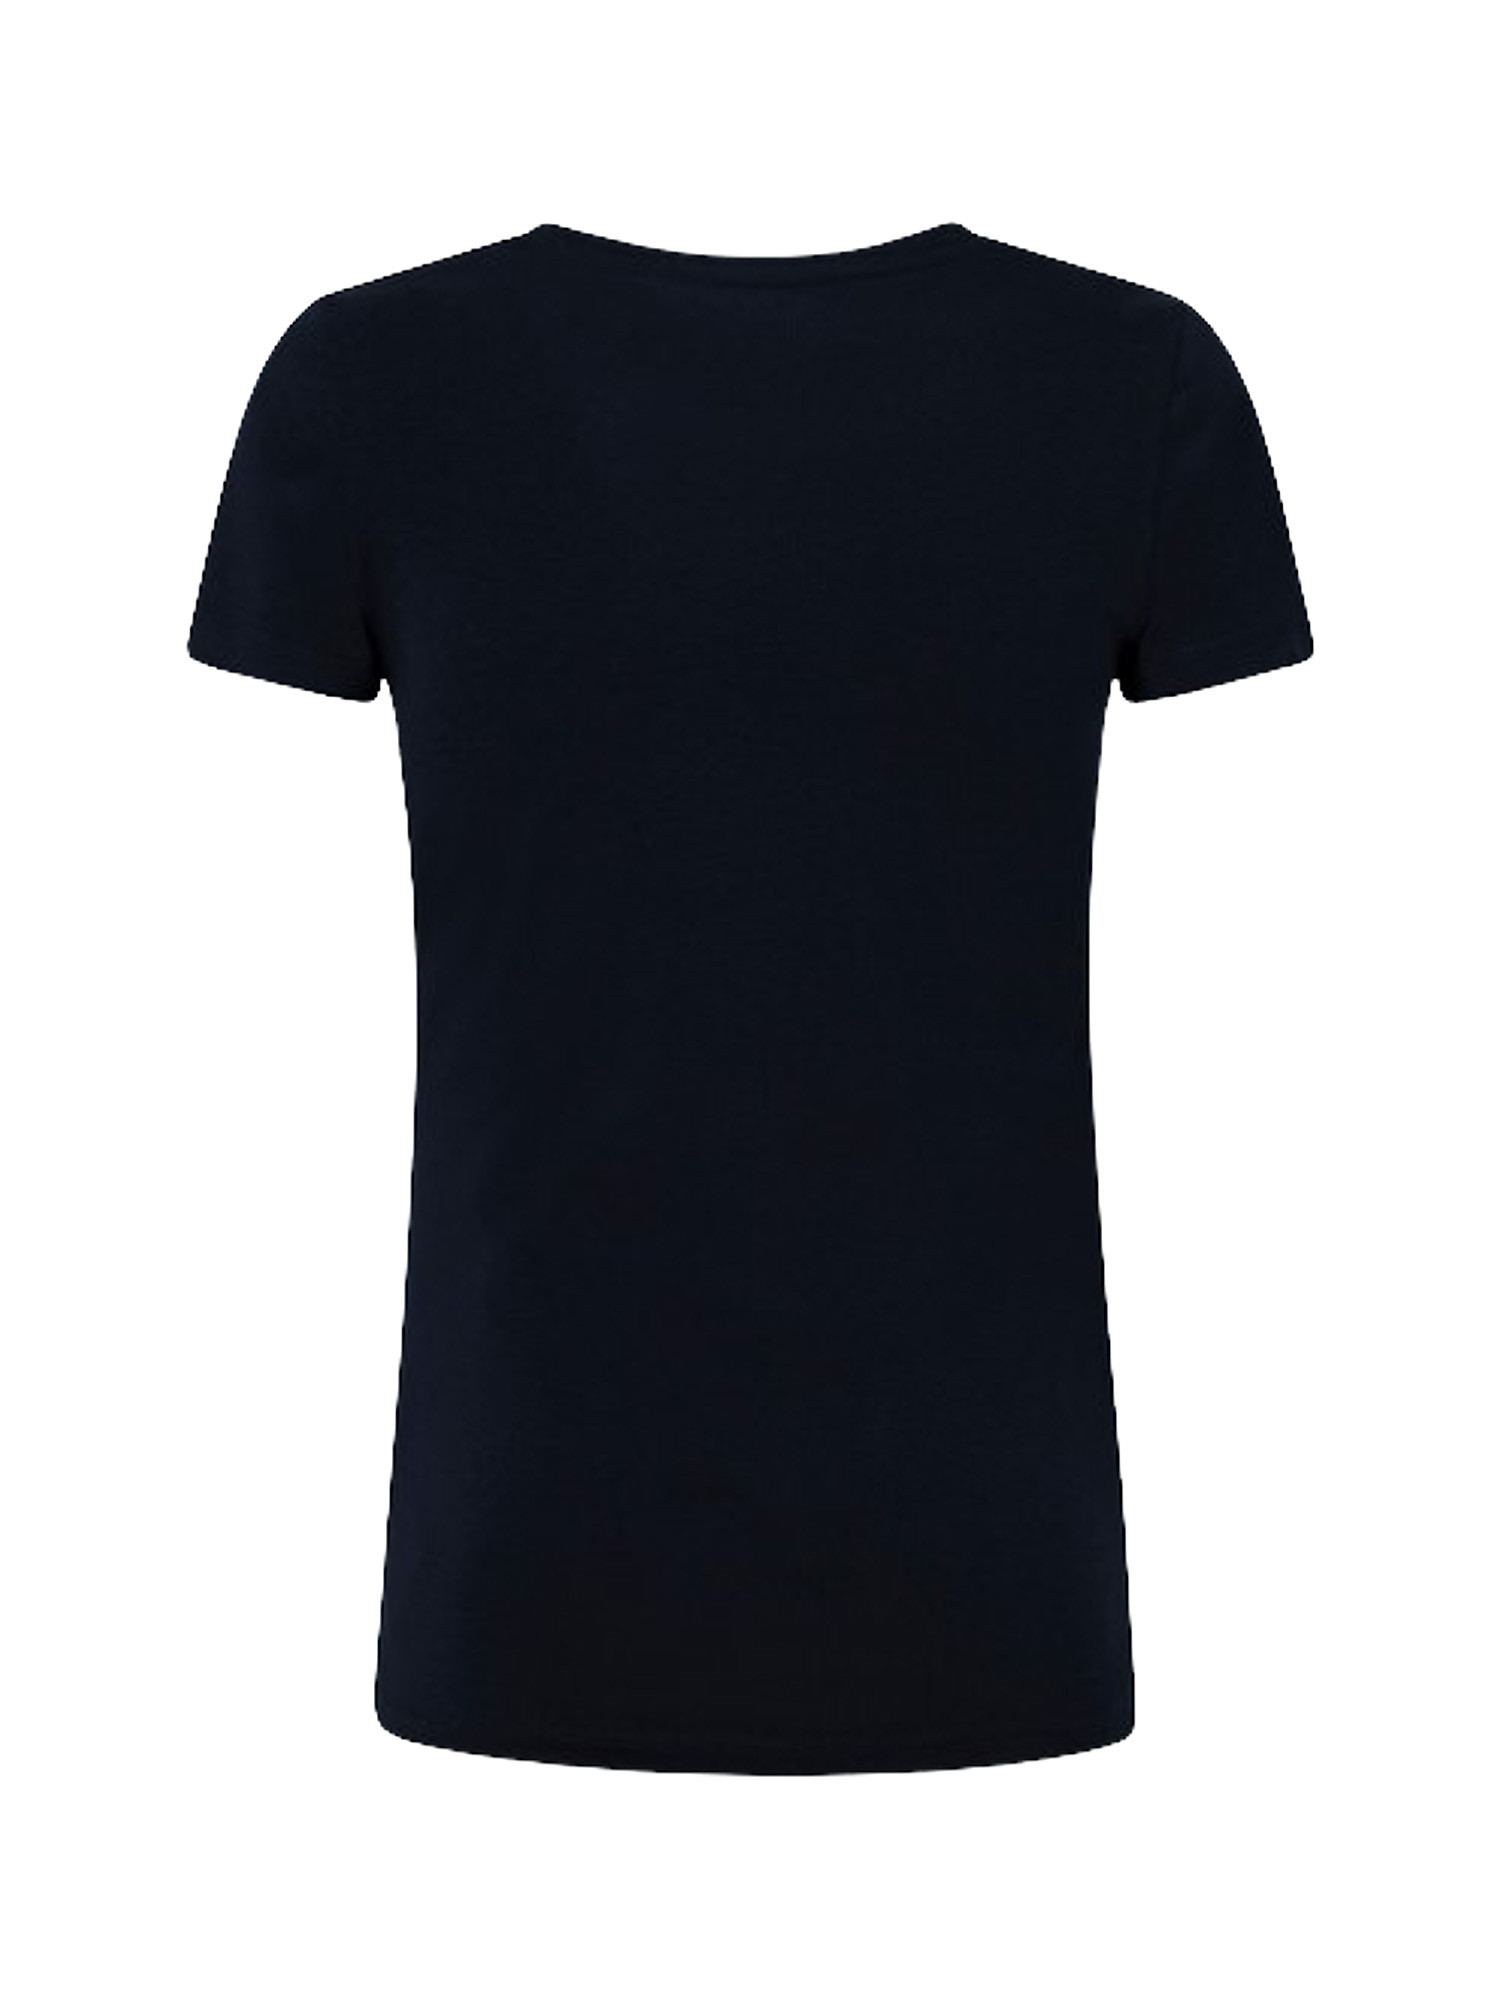 T-shirt con stampa logo anna, Blu, large image number 1